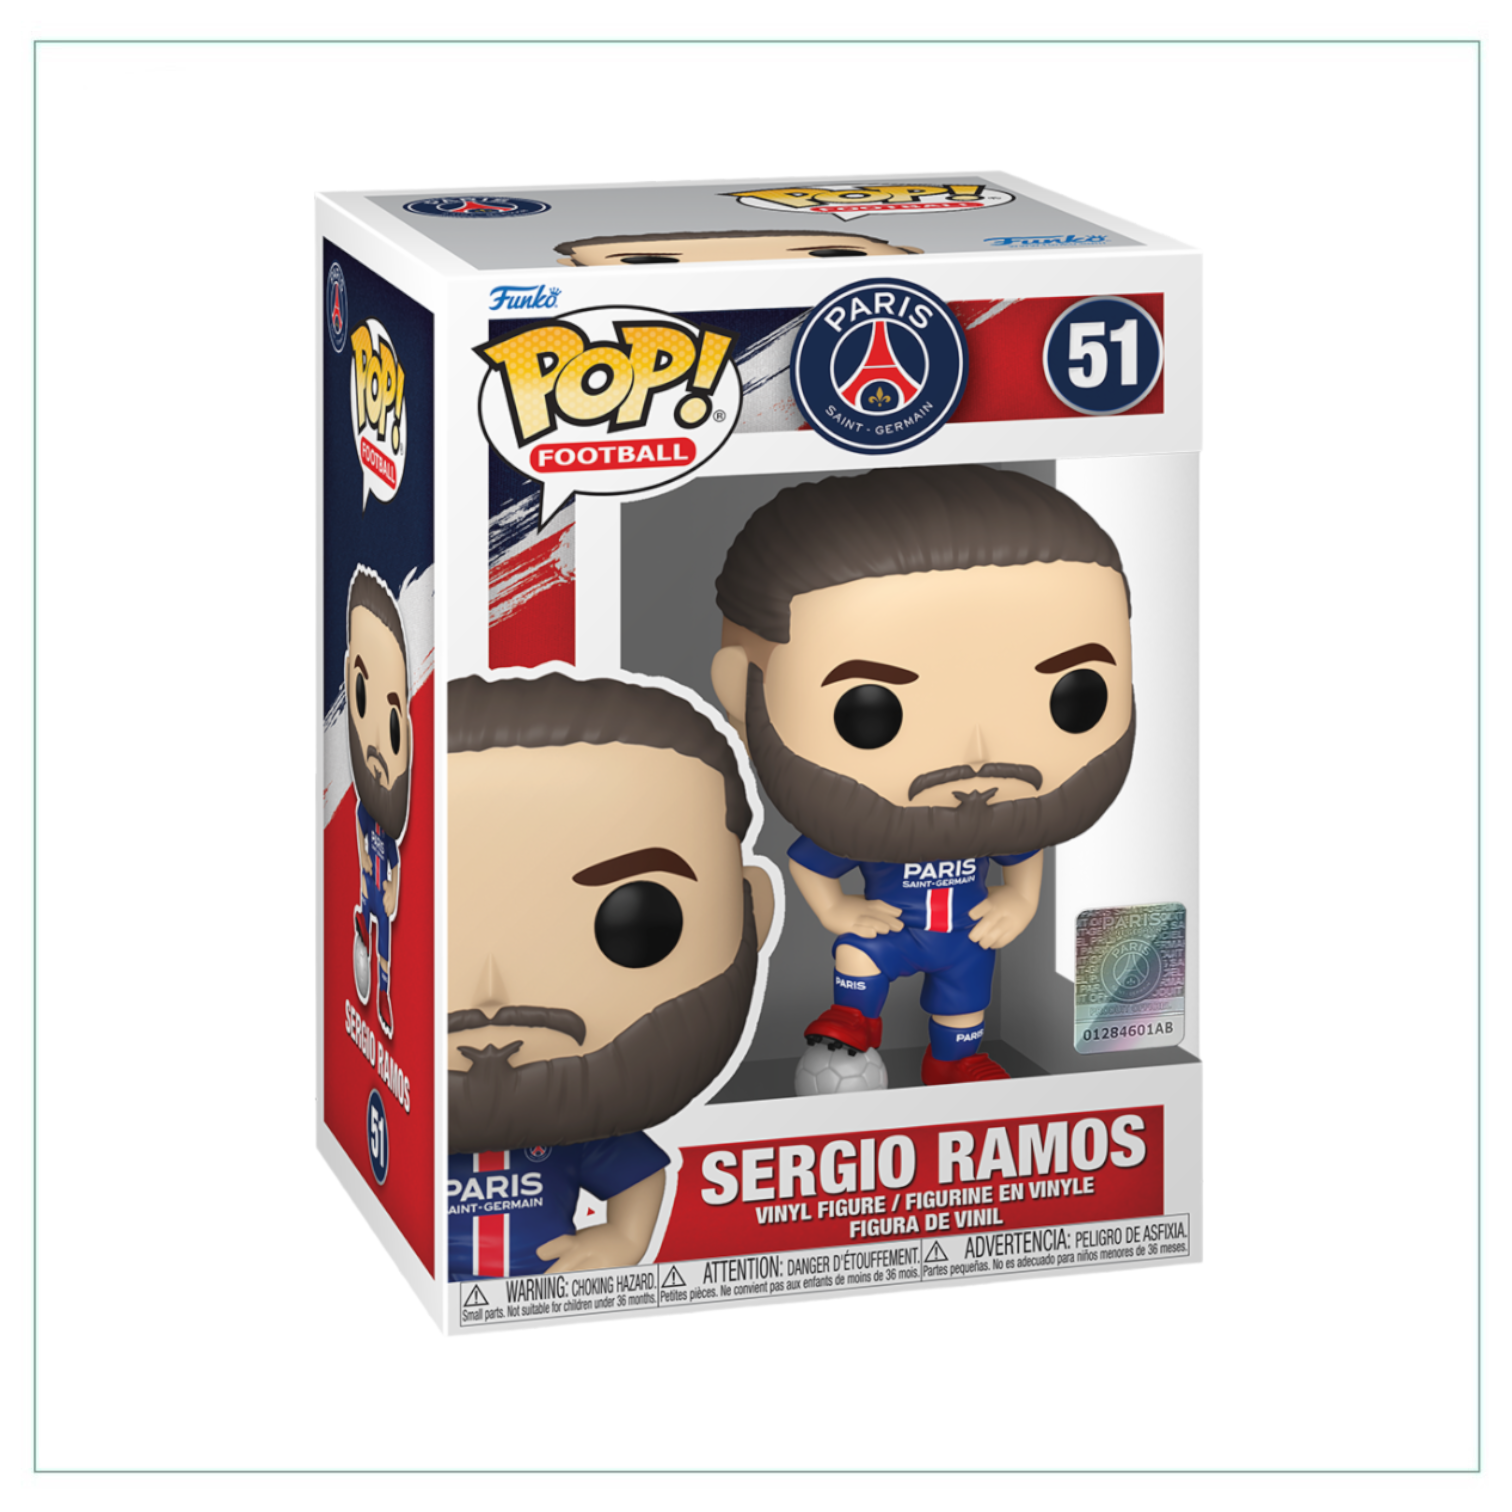 Sergio Ramos #51 Funko Pop! Football